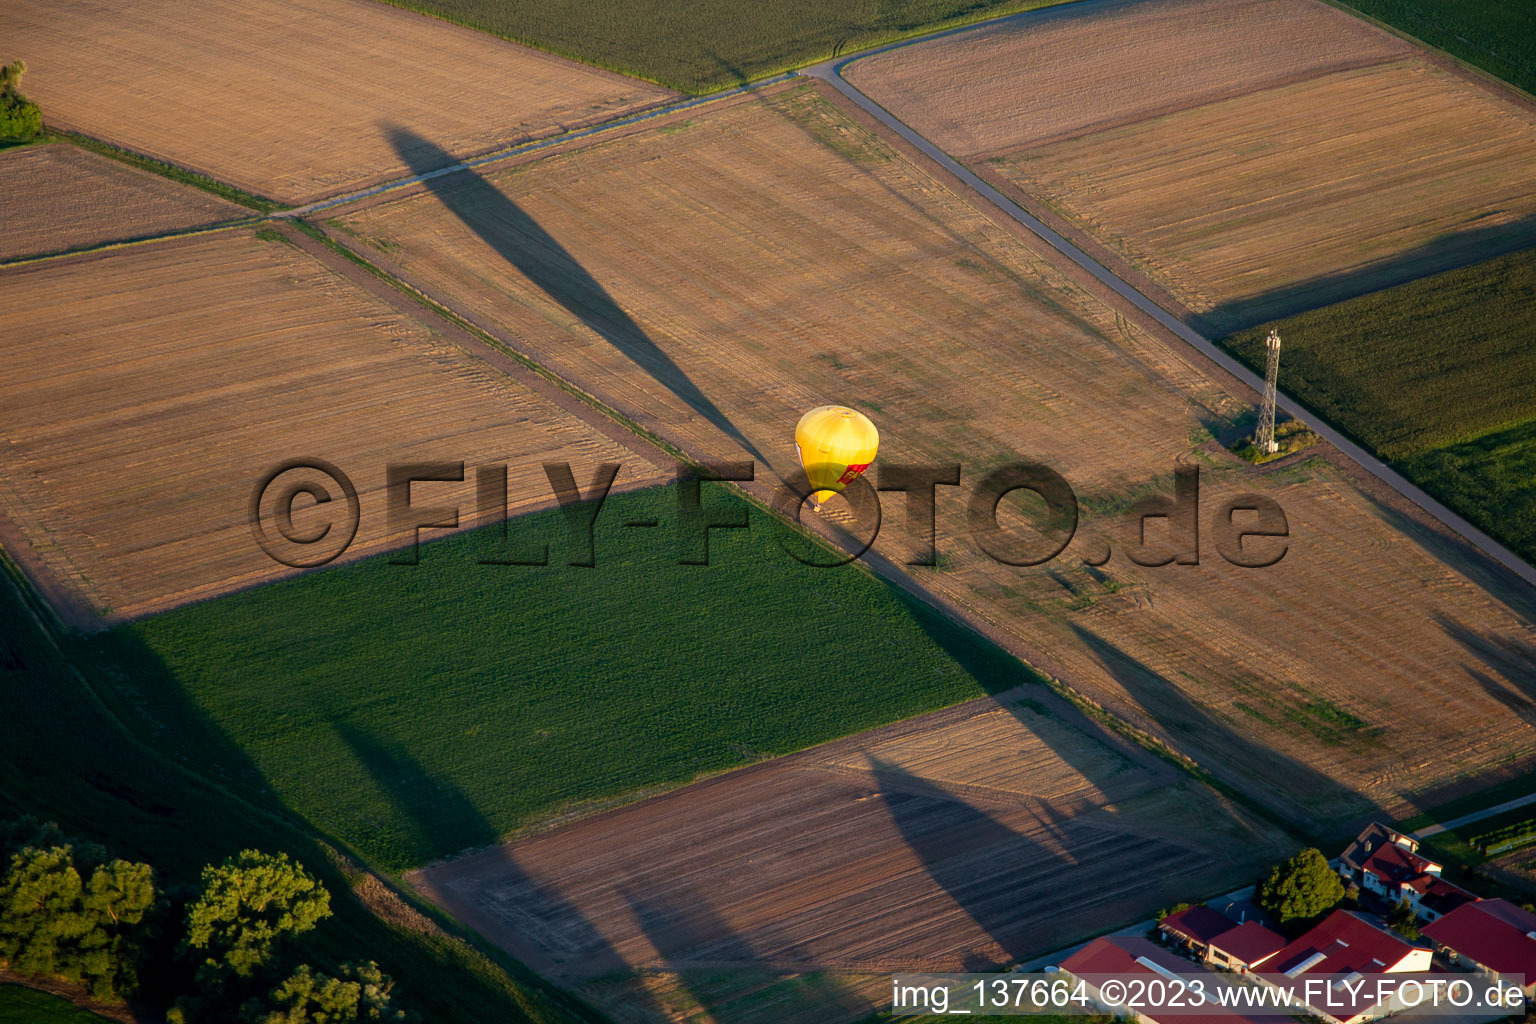 PfalzGas hot air balloons landed in Billigheim-Ingenheim in the state Rhineland-Palatinate, Germany